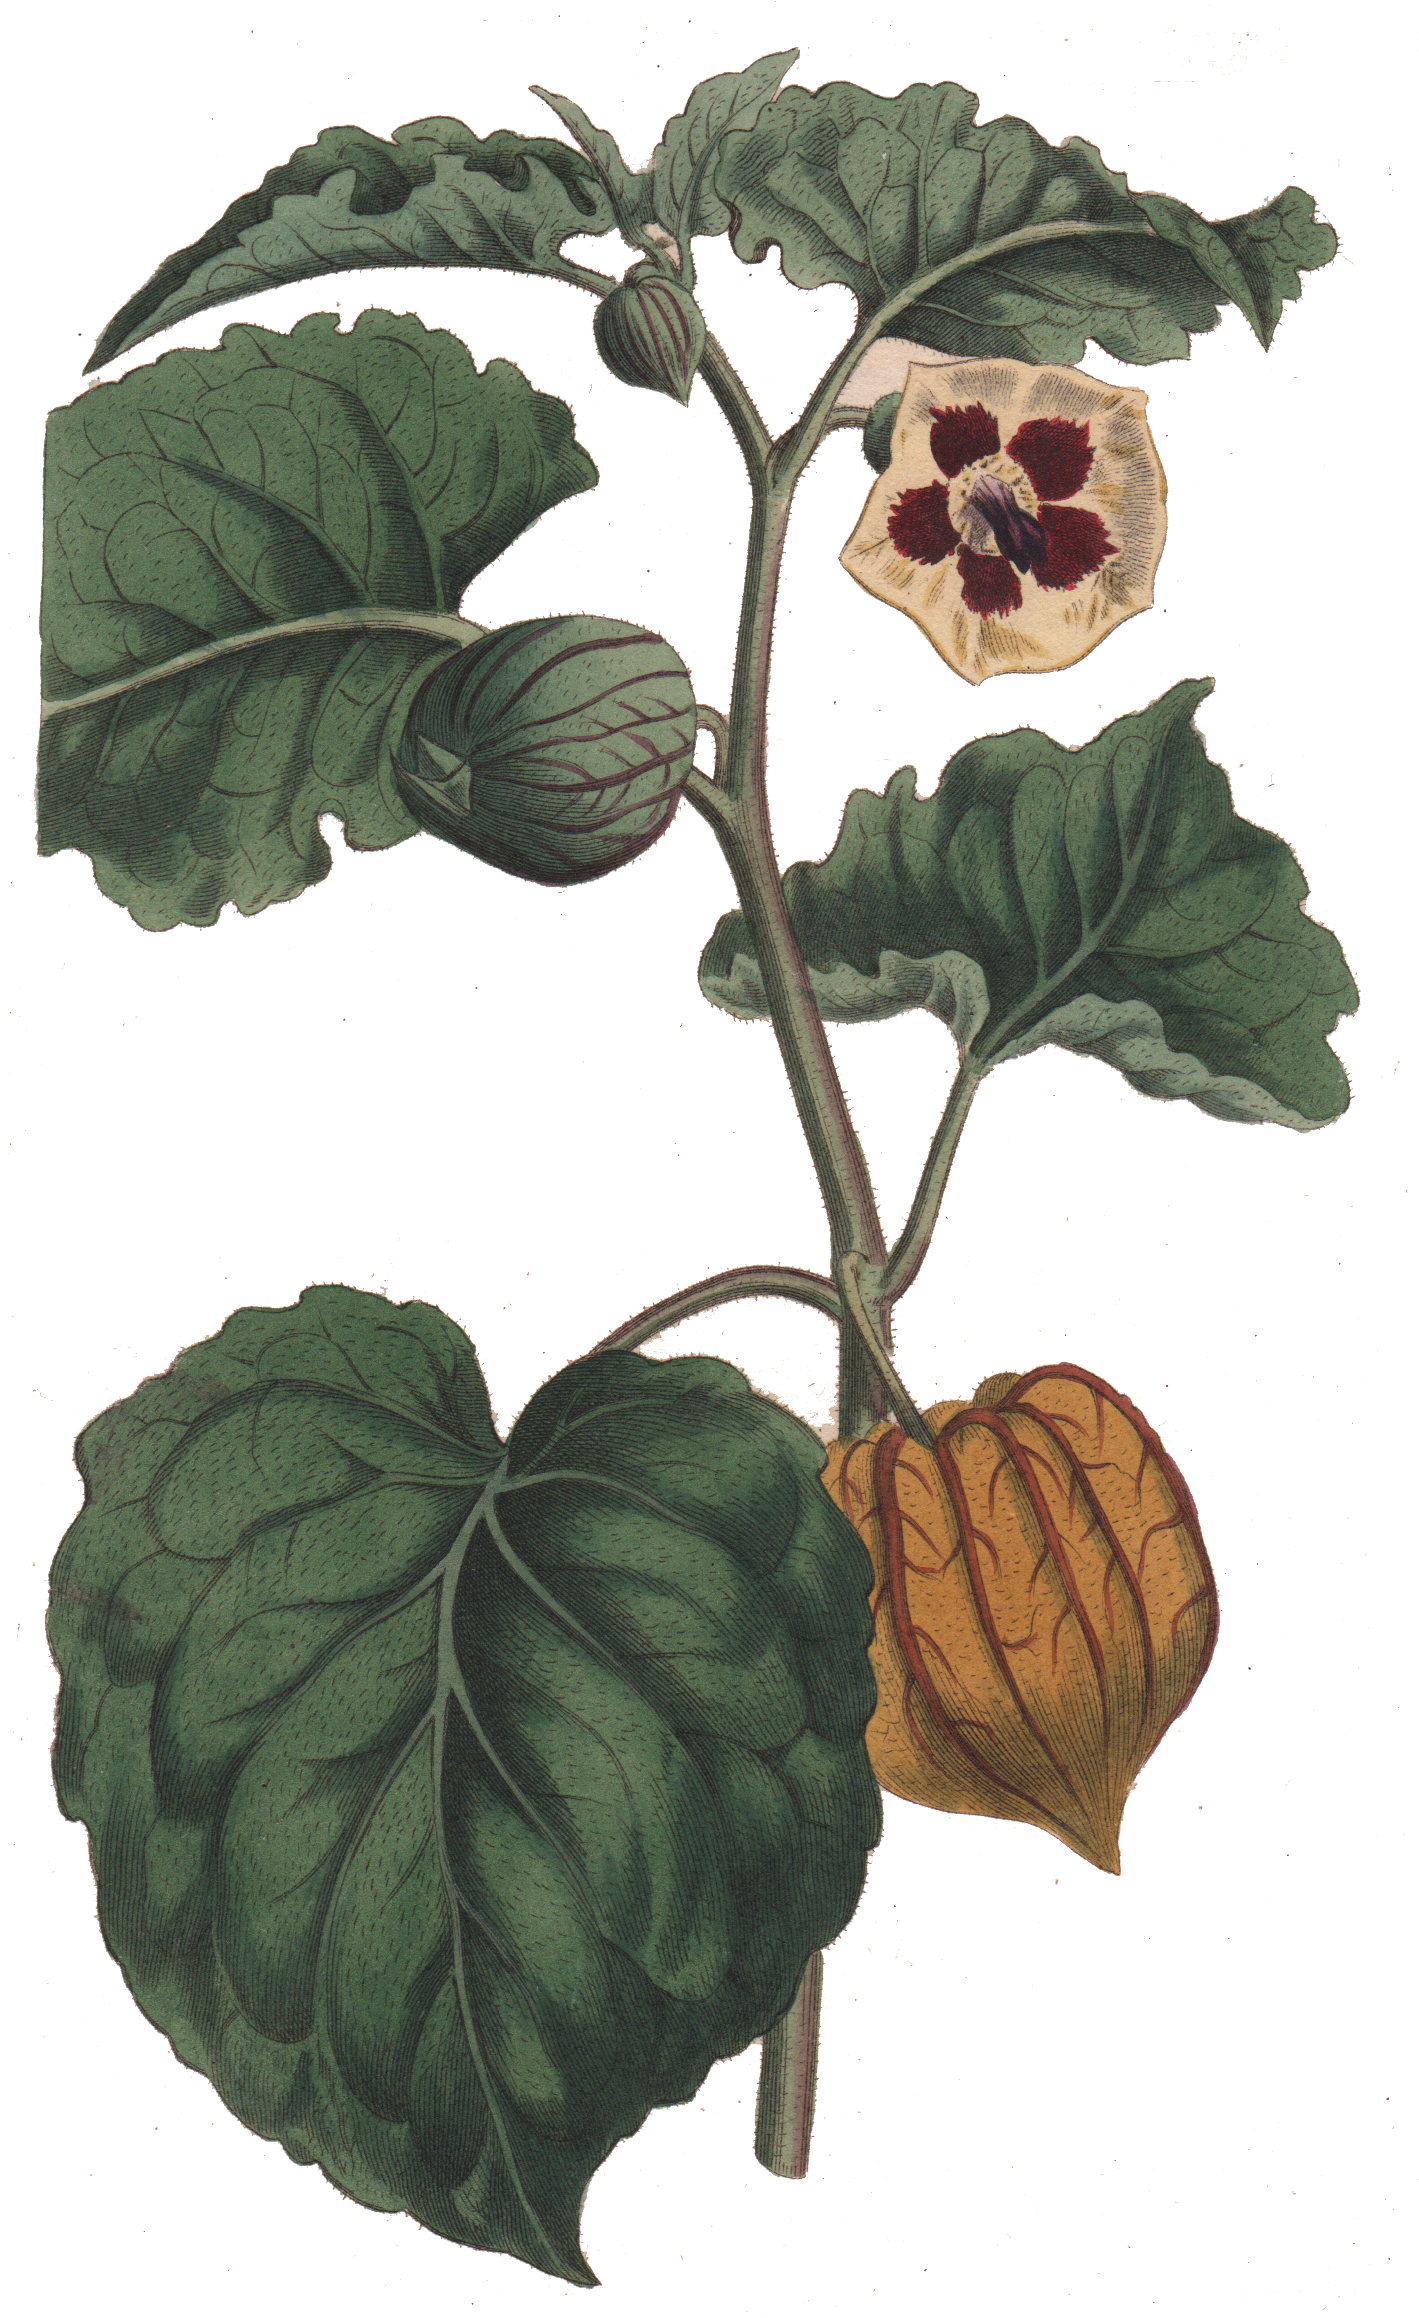 Wm Curtis's Botanical Magazine